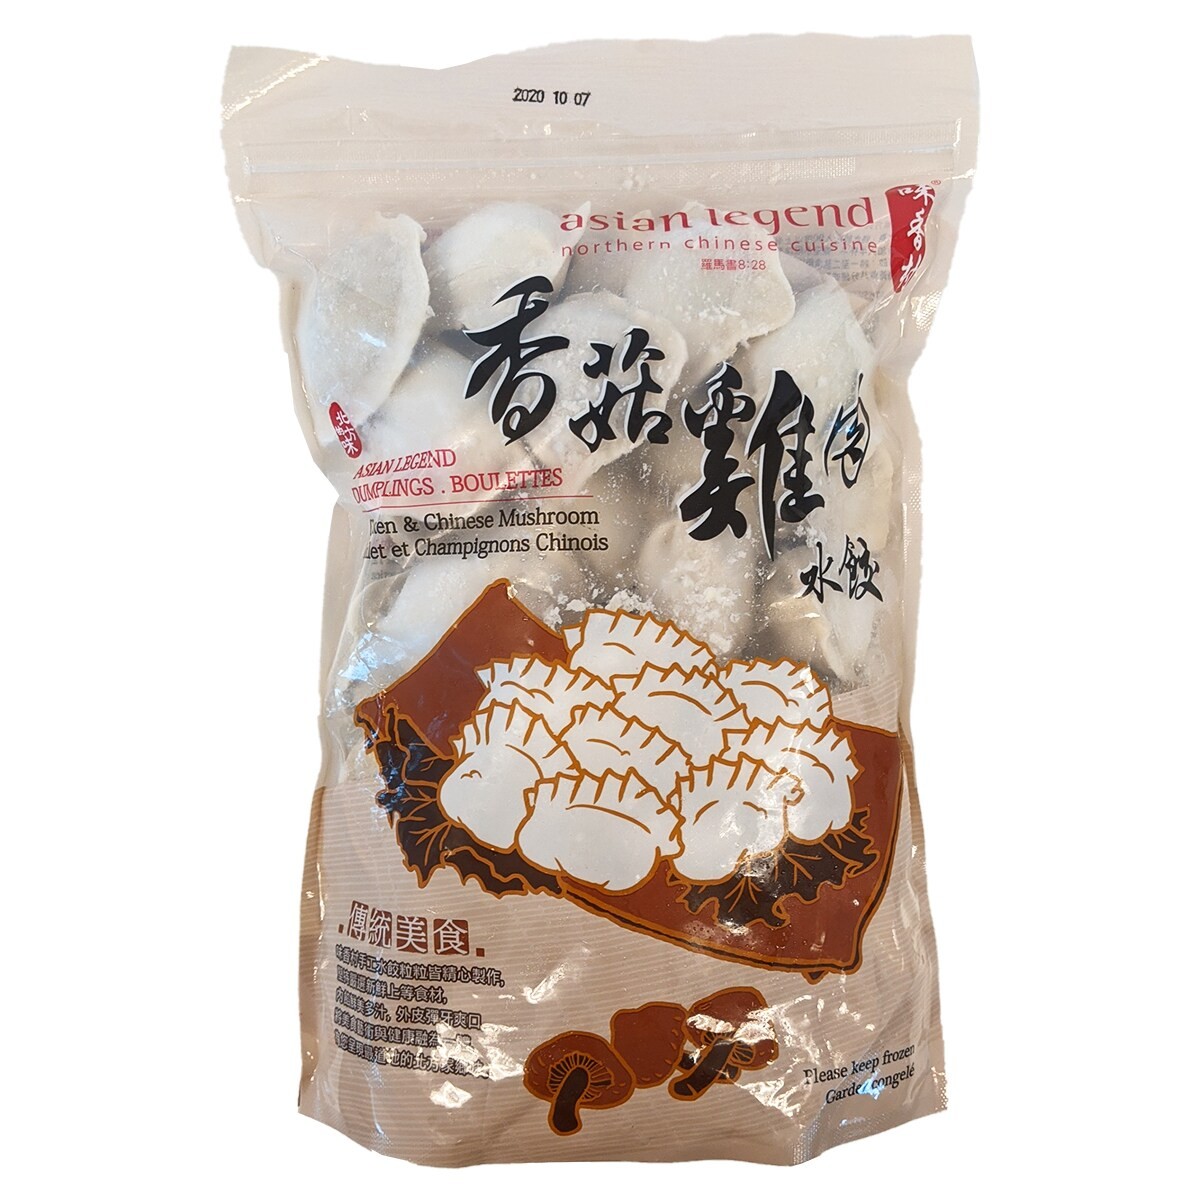 wxc-dumplings-chicken-chinese-mushrooms